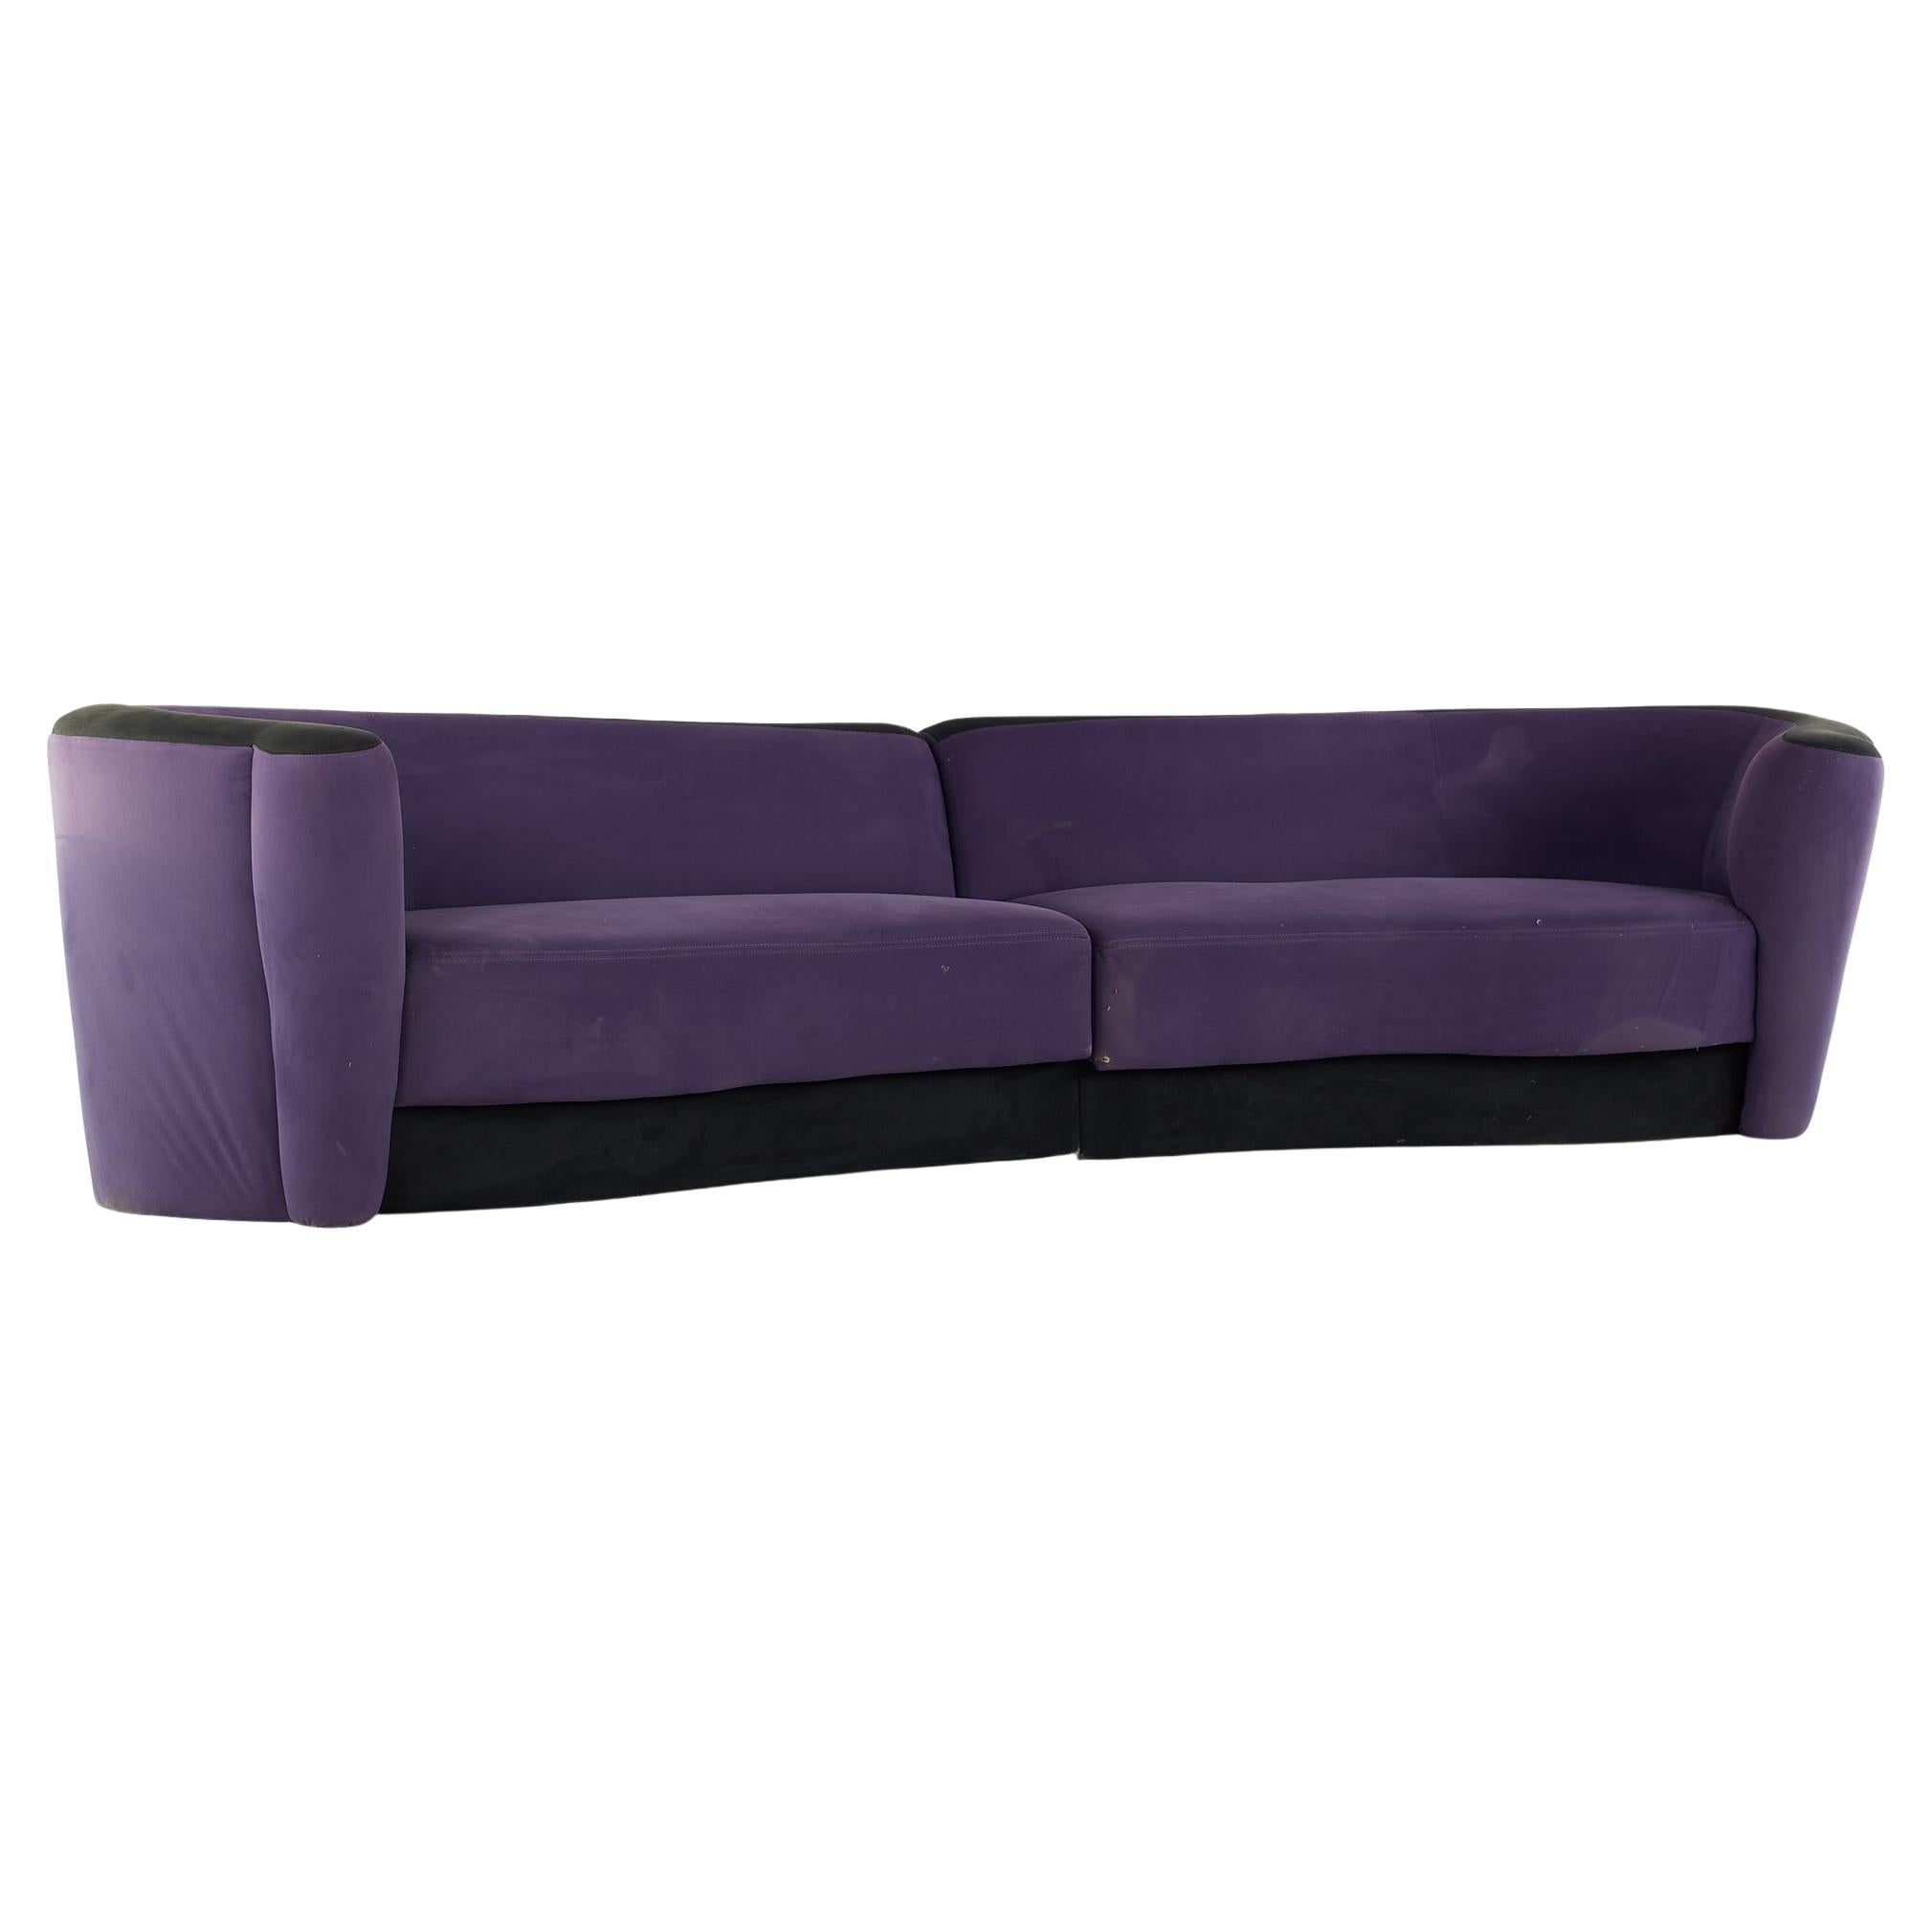 Kagan Style Midcentury Plinth Base 2 Piece Sofa For Sale